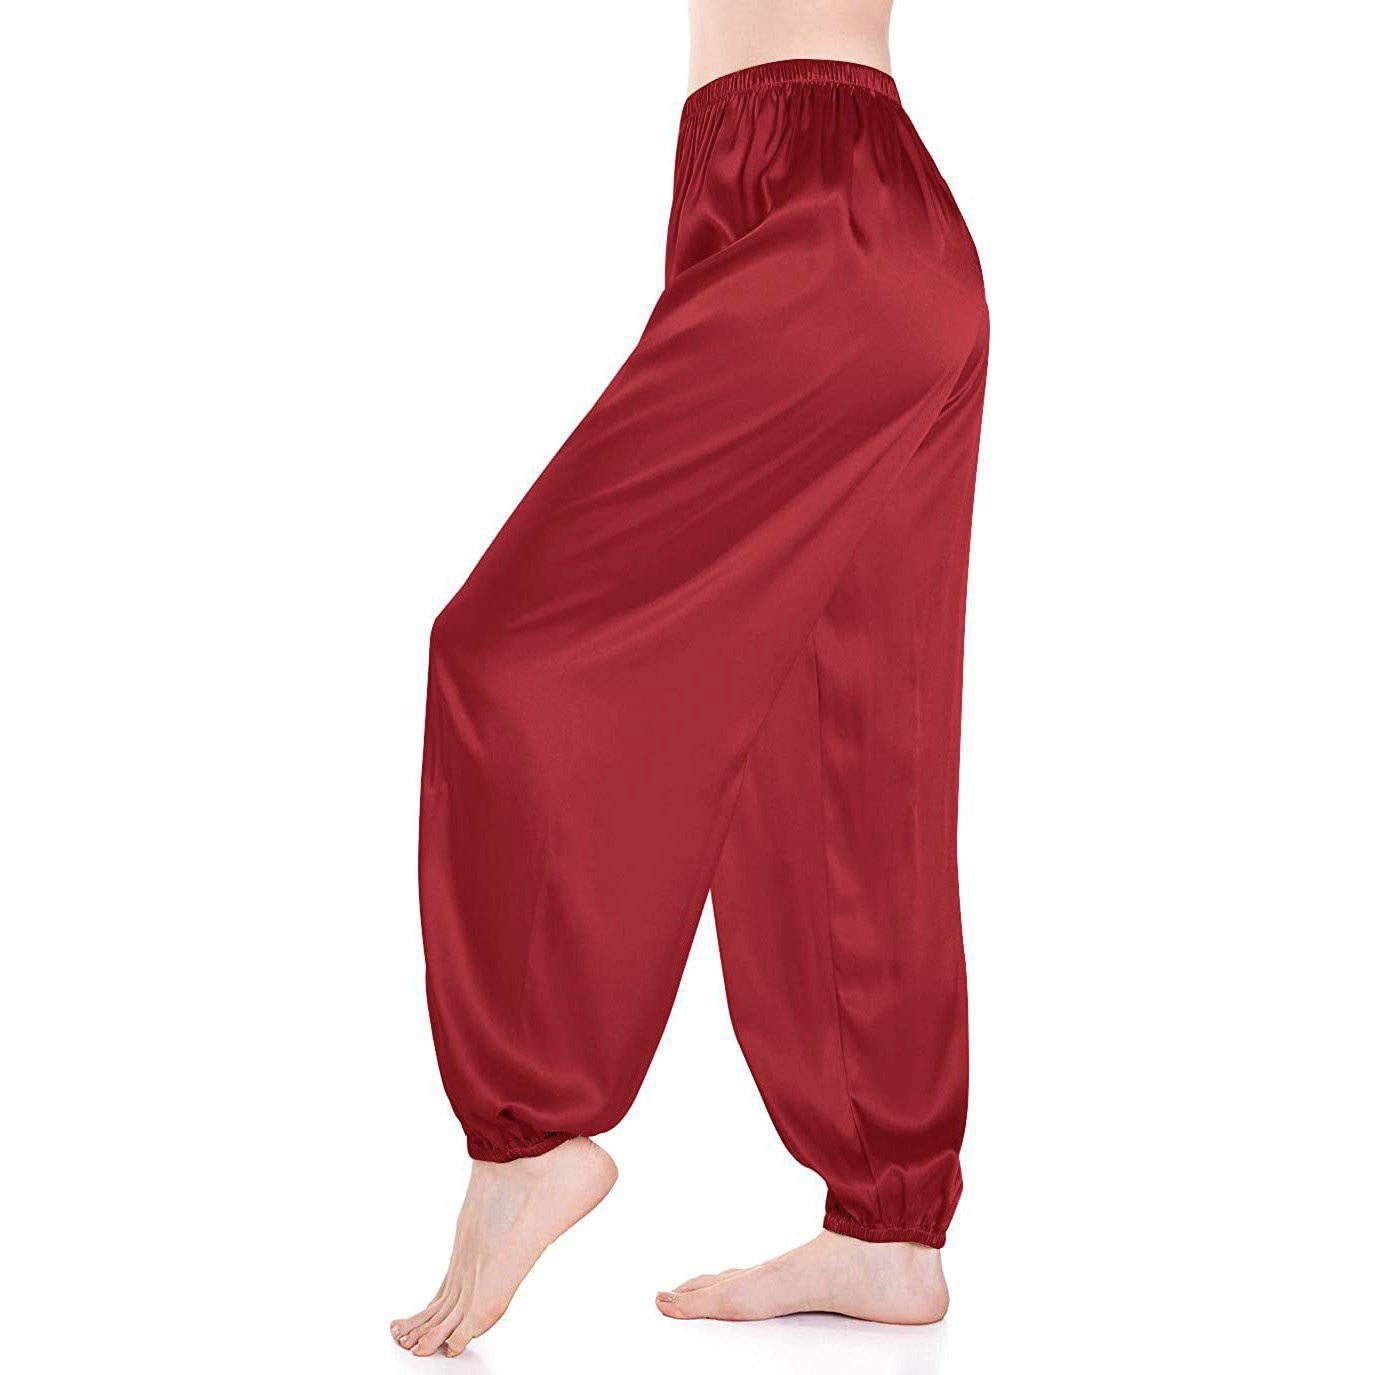 Classic High Waist Stretch Pants for Women Slim Harem Pants